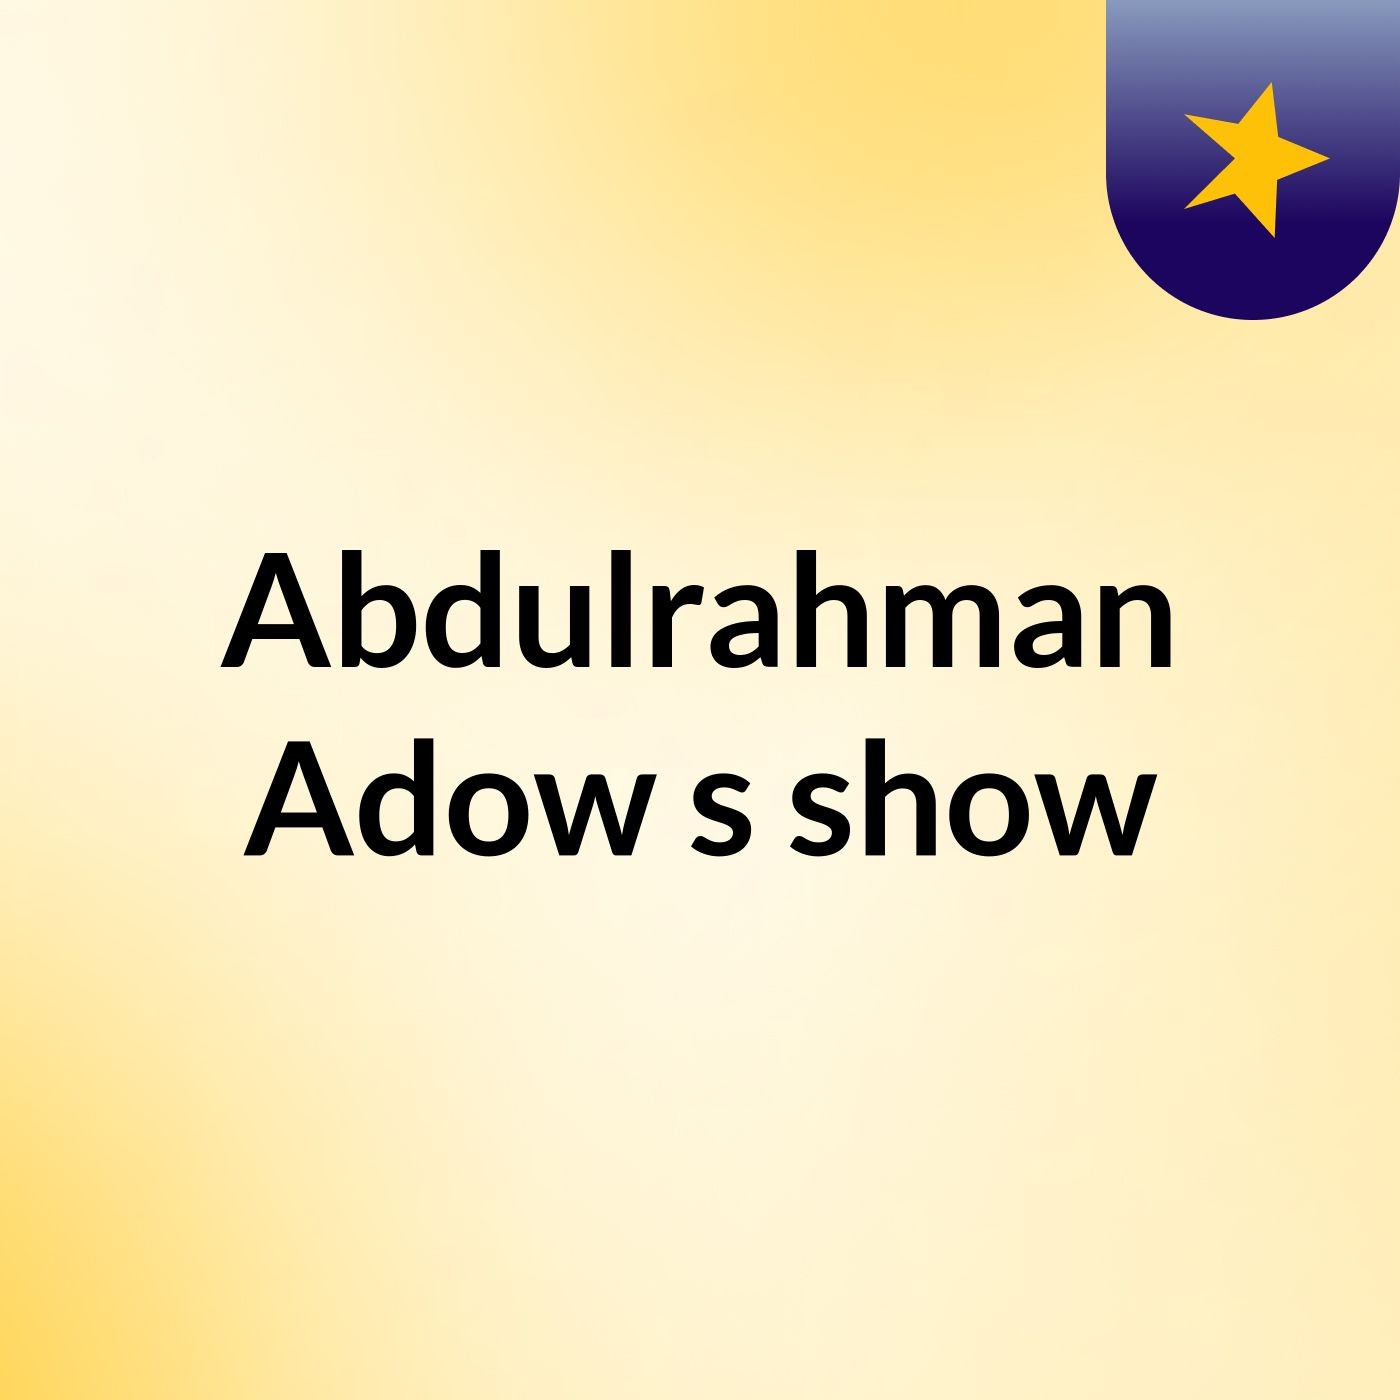 Abdulrahman Adow's show